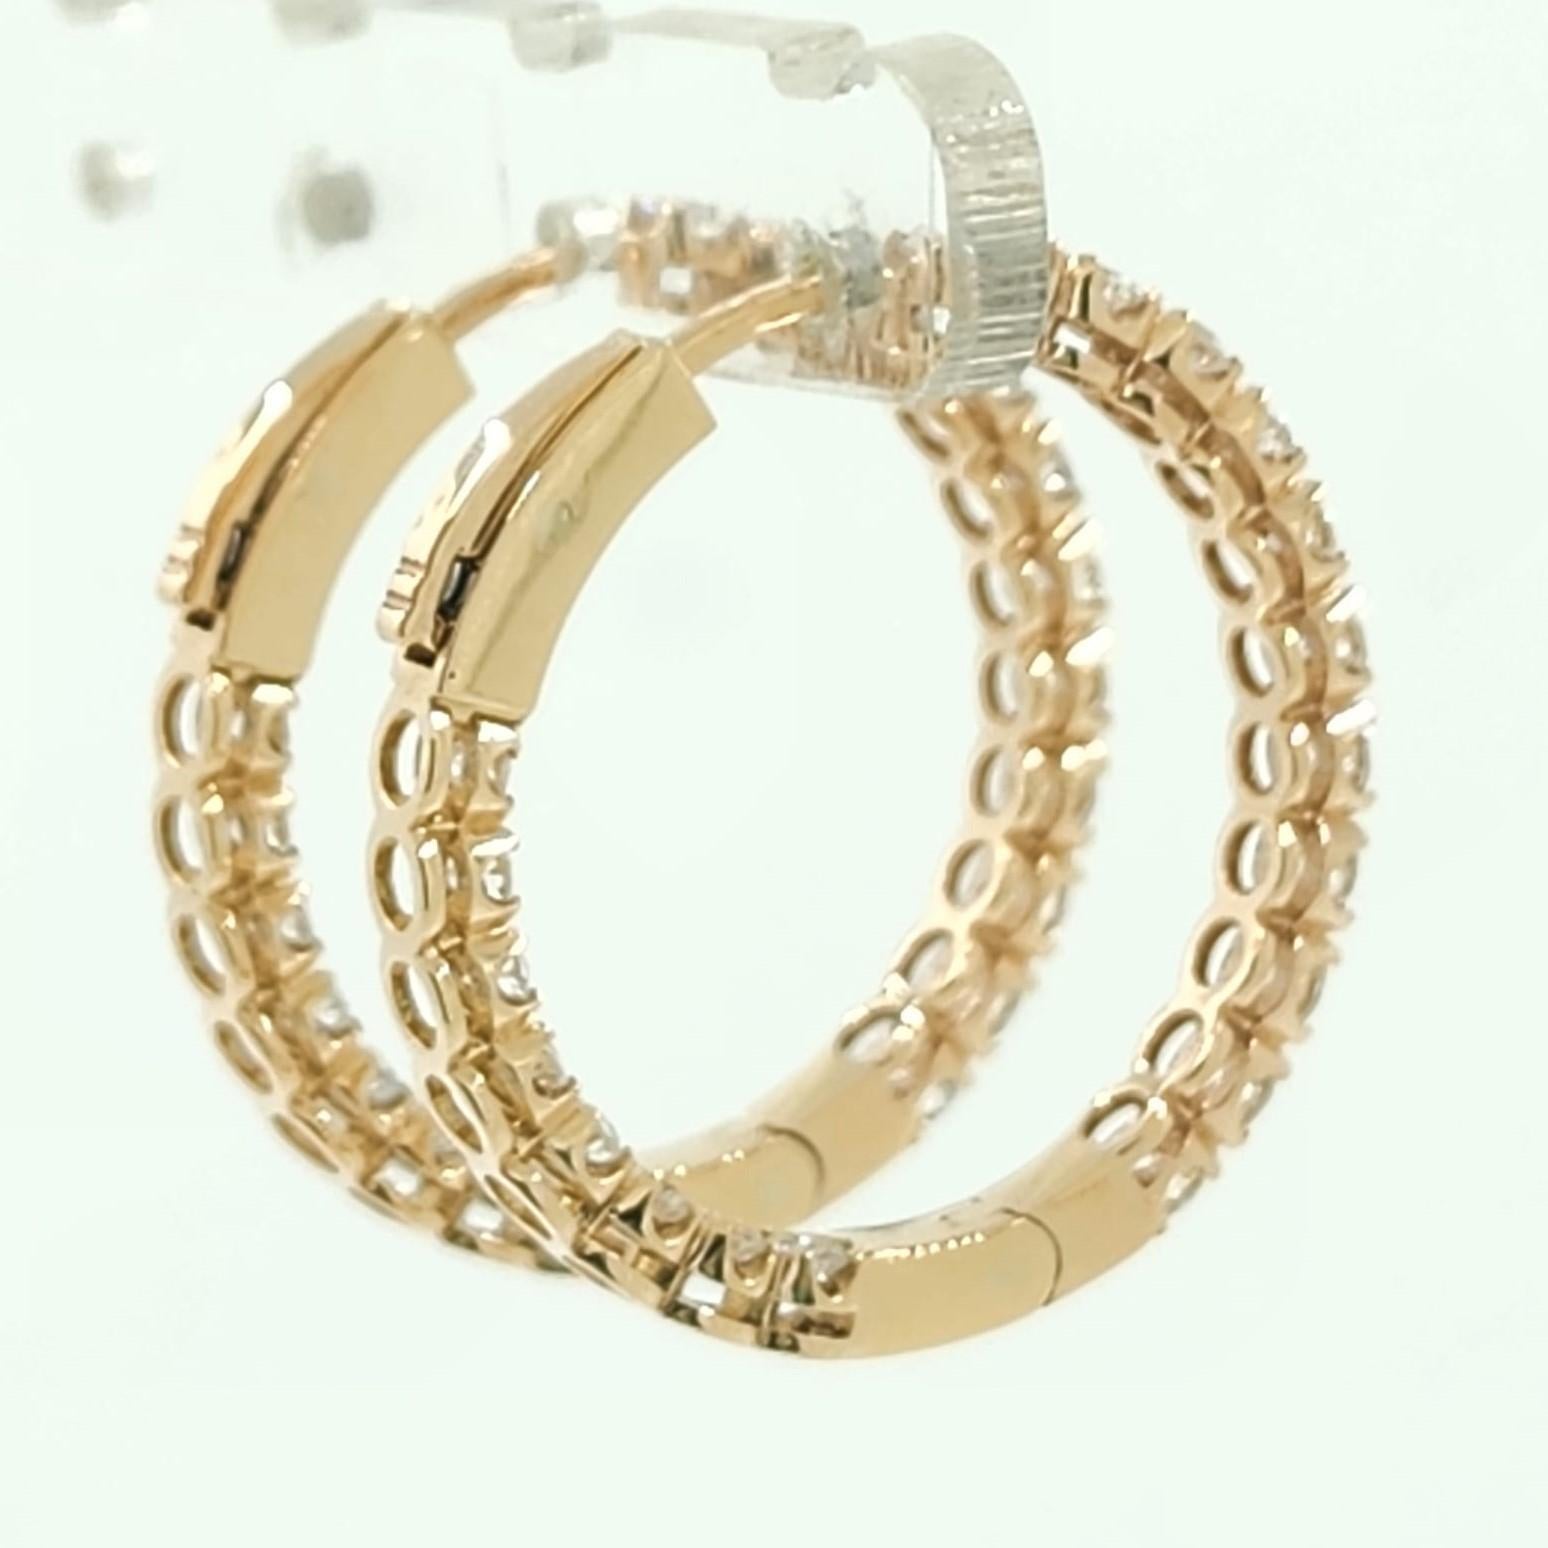 1.51Carat Diamond Hoop Earrings in 18 Karat Rose Gold For Sale 1